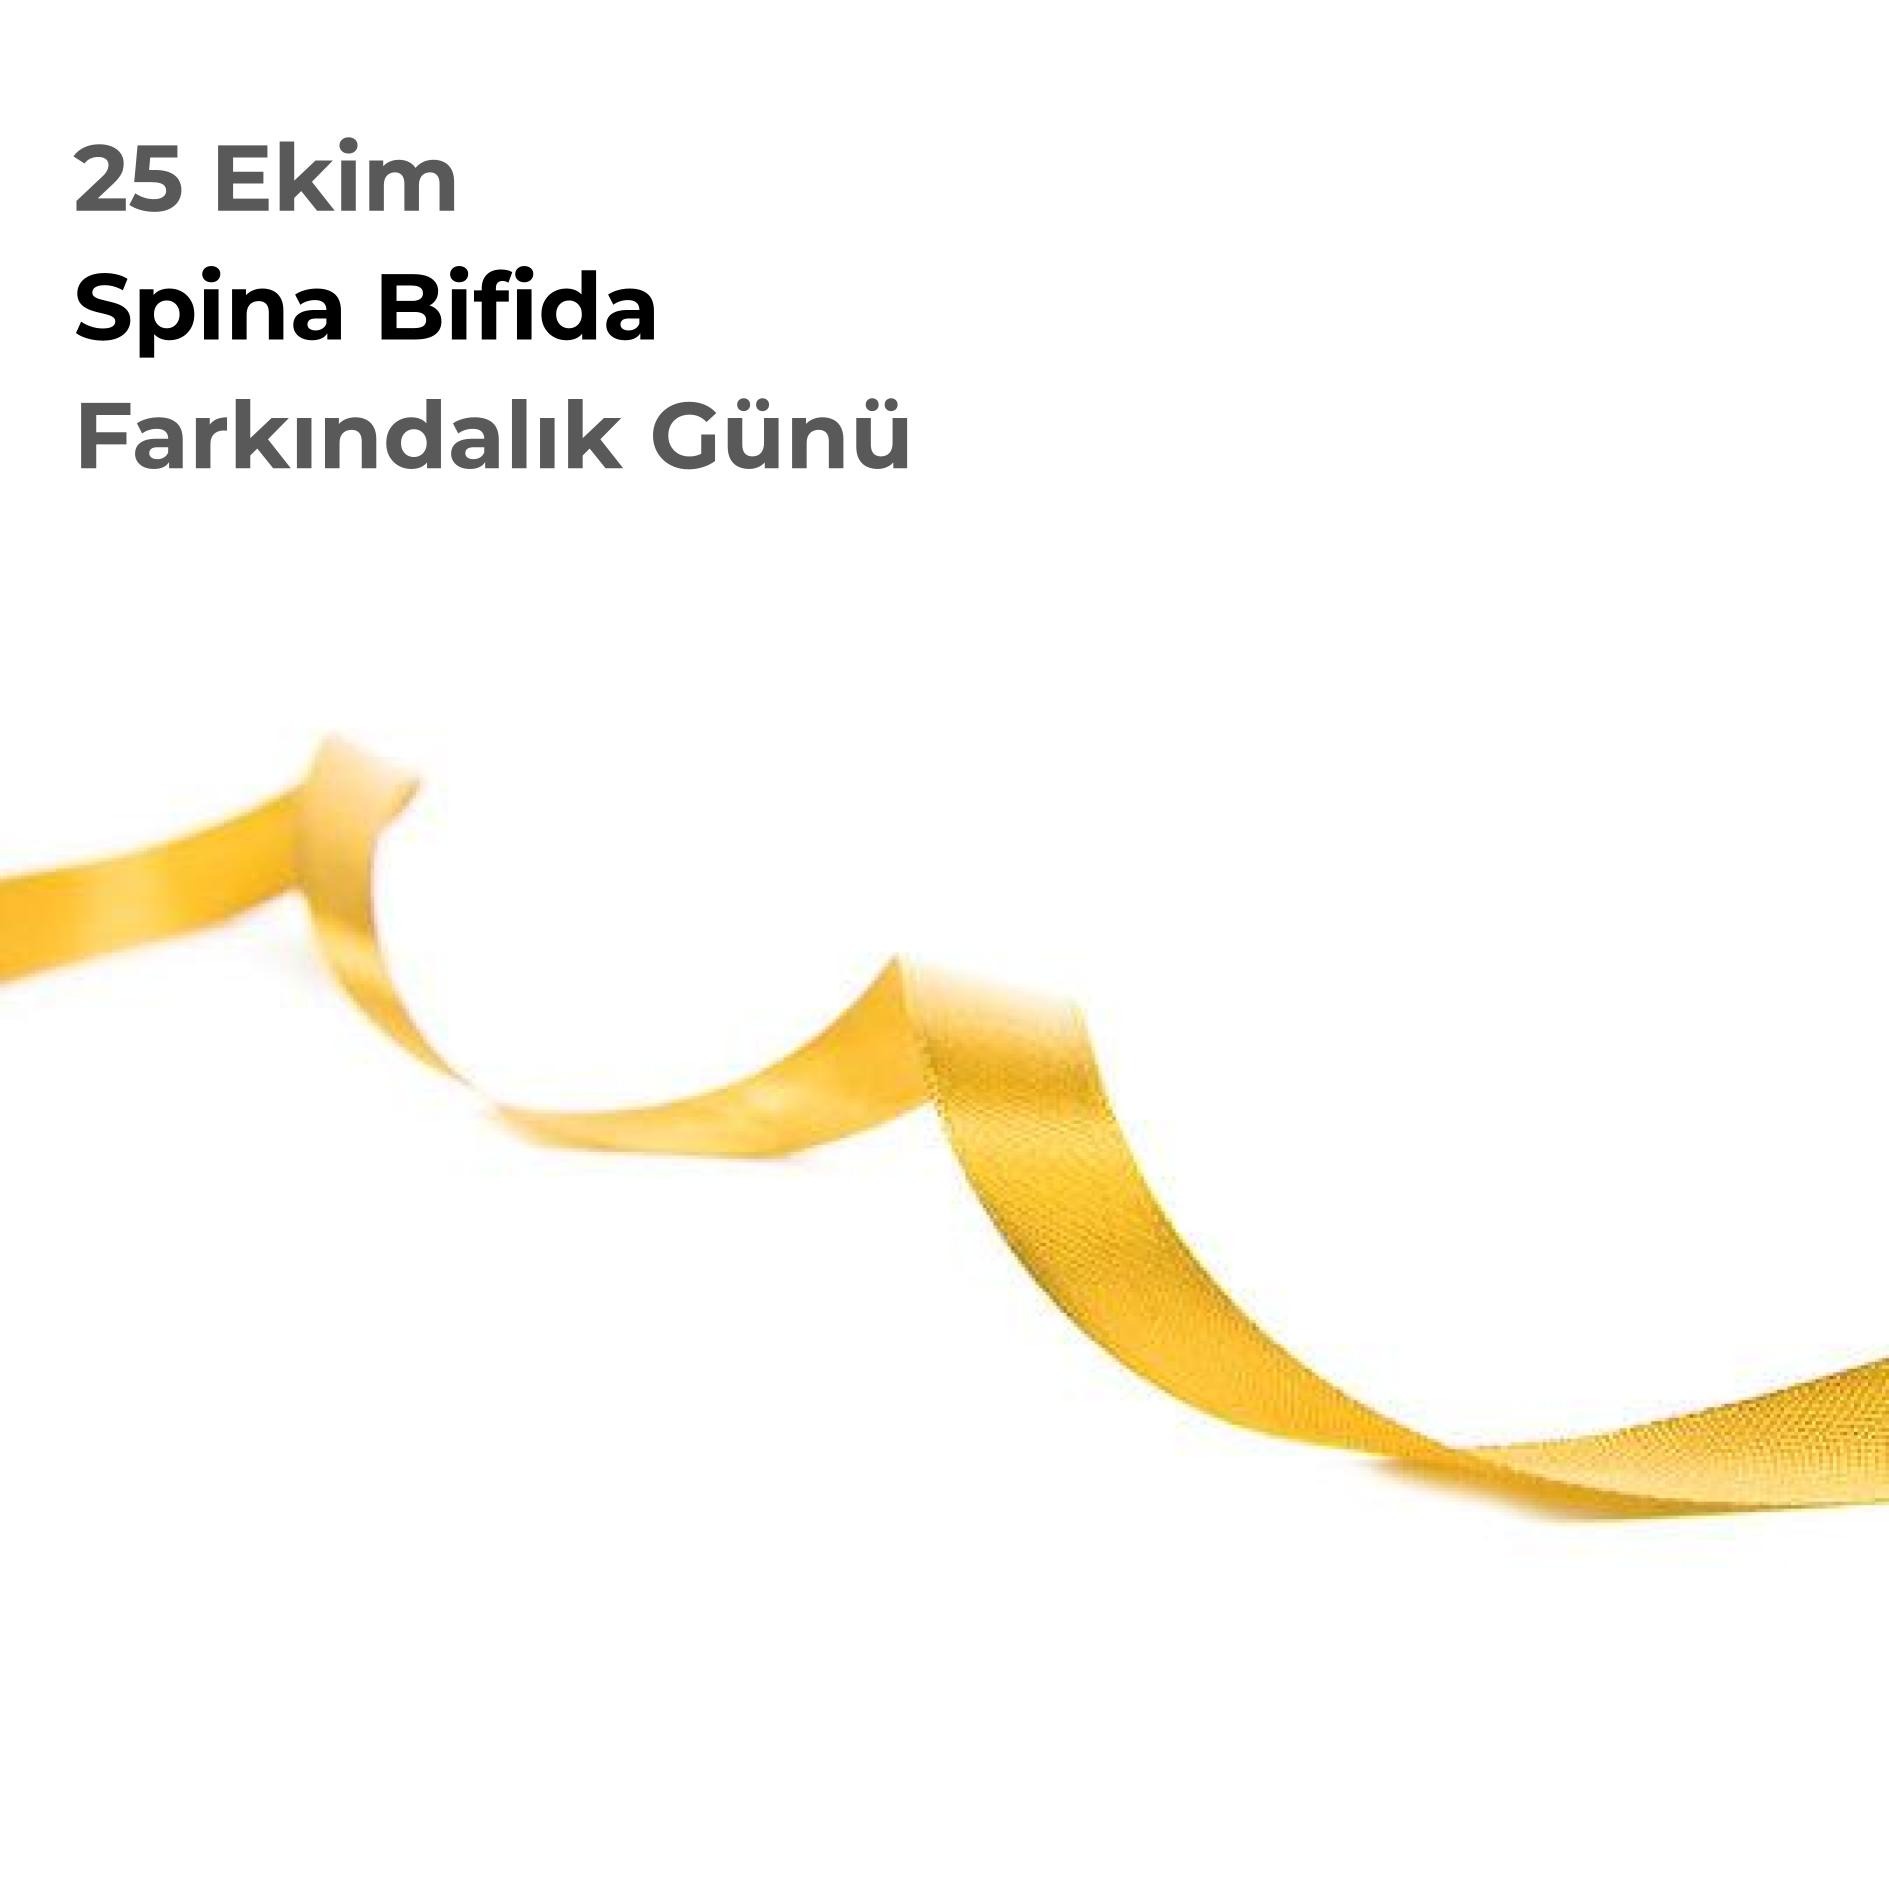 Bugün 25 Ekim Dünya Spina Bifida günü!